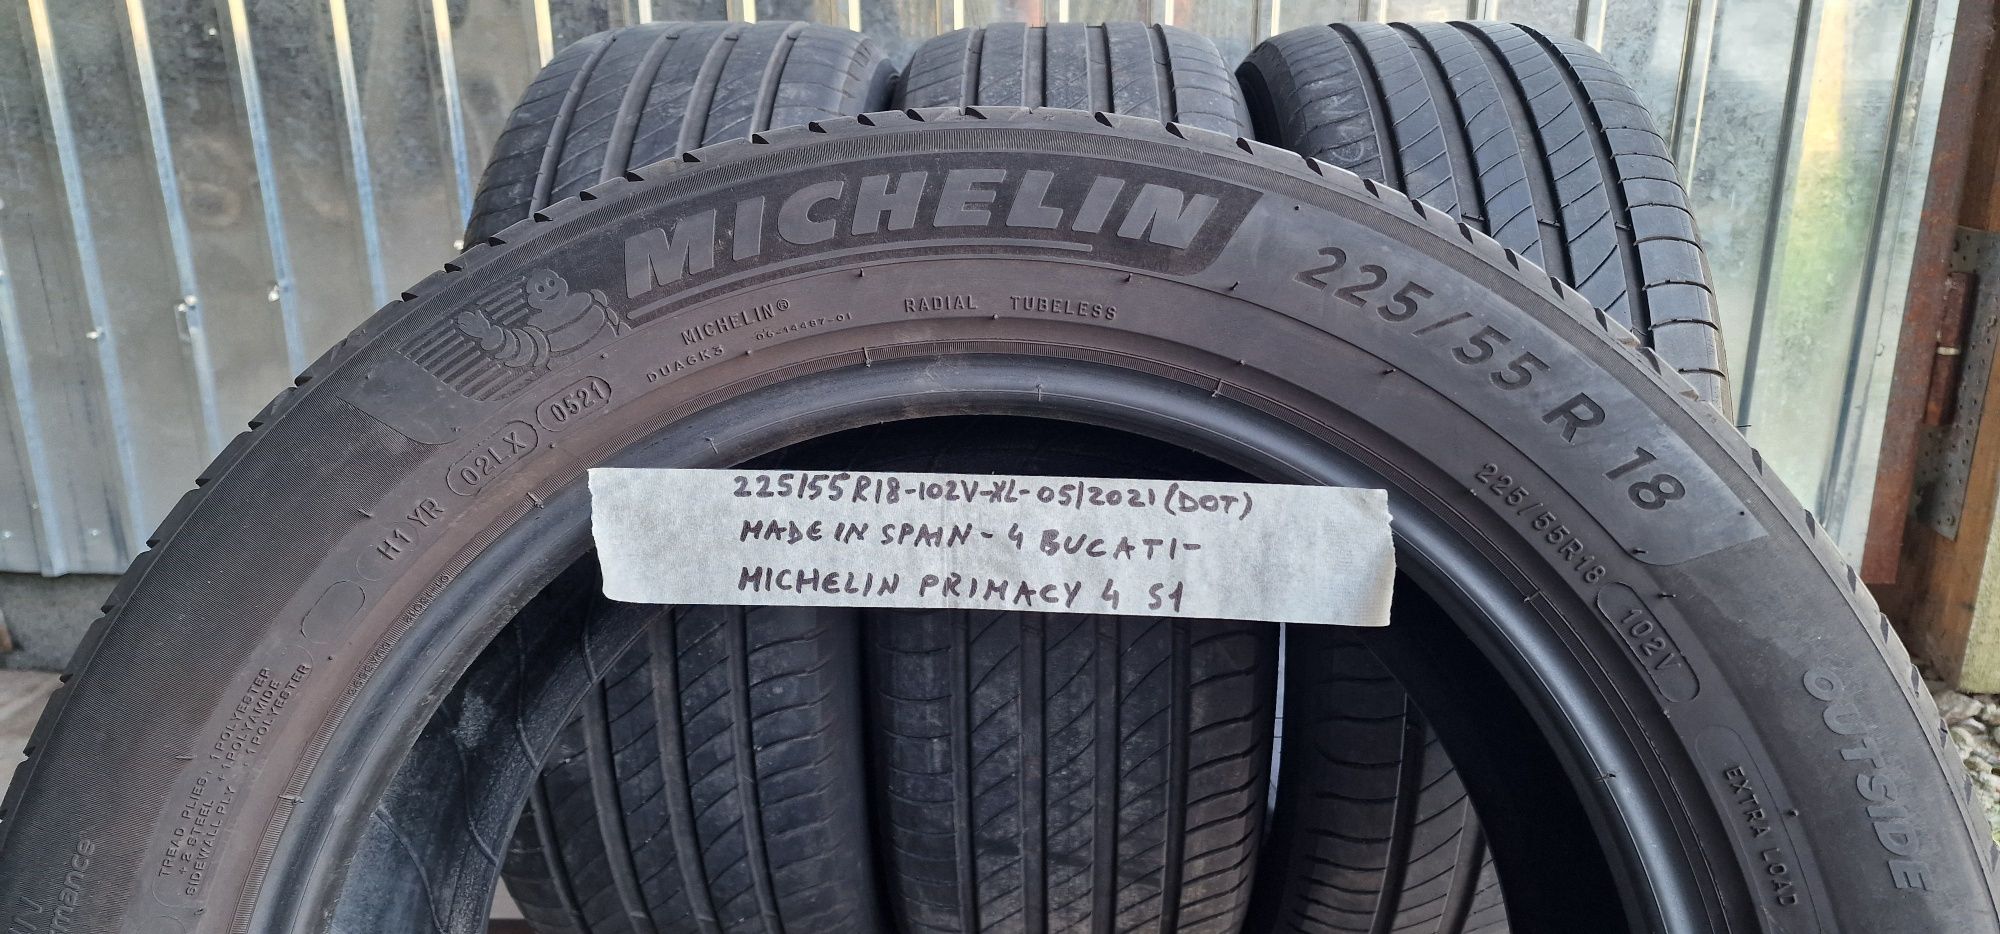 225/55 R18 - 4 anvelope - Michelin - de vara - DOT: 2021 !